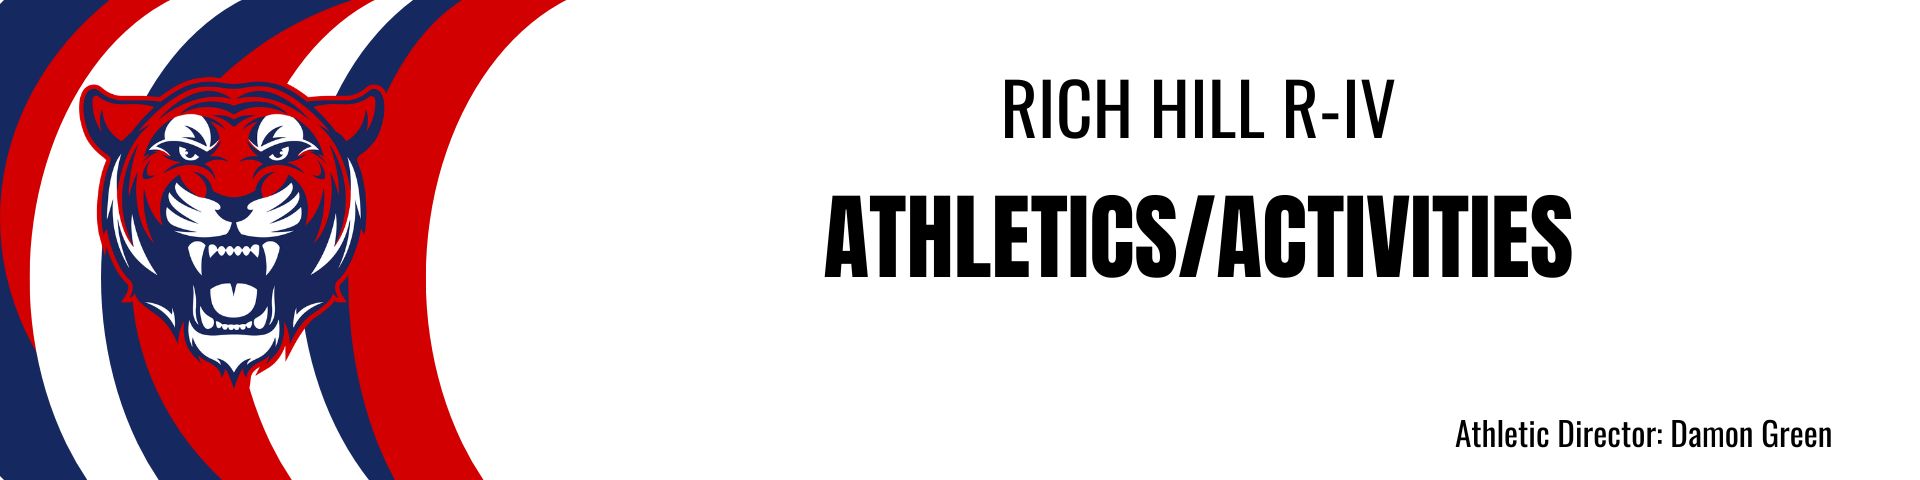 RHHS Athletics